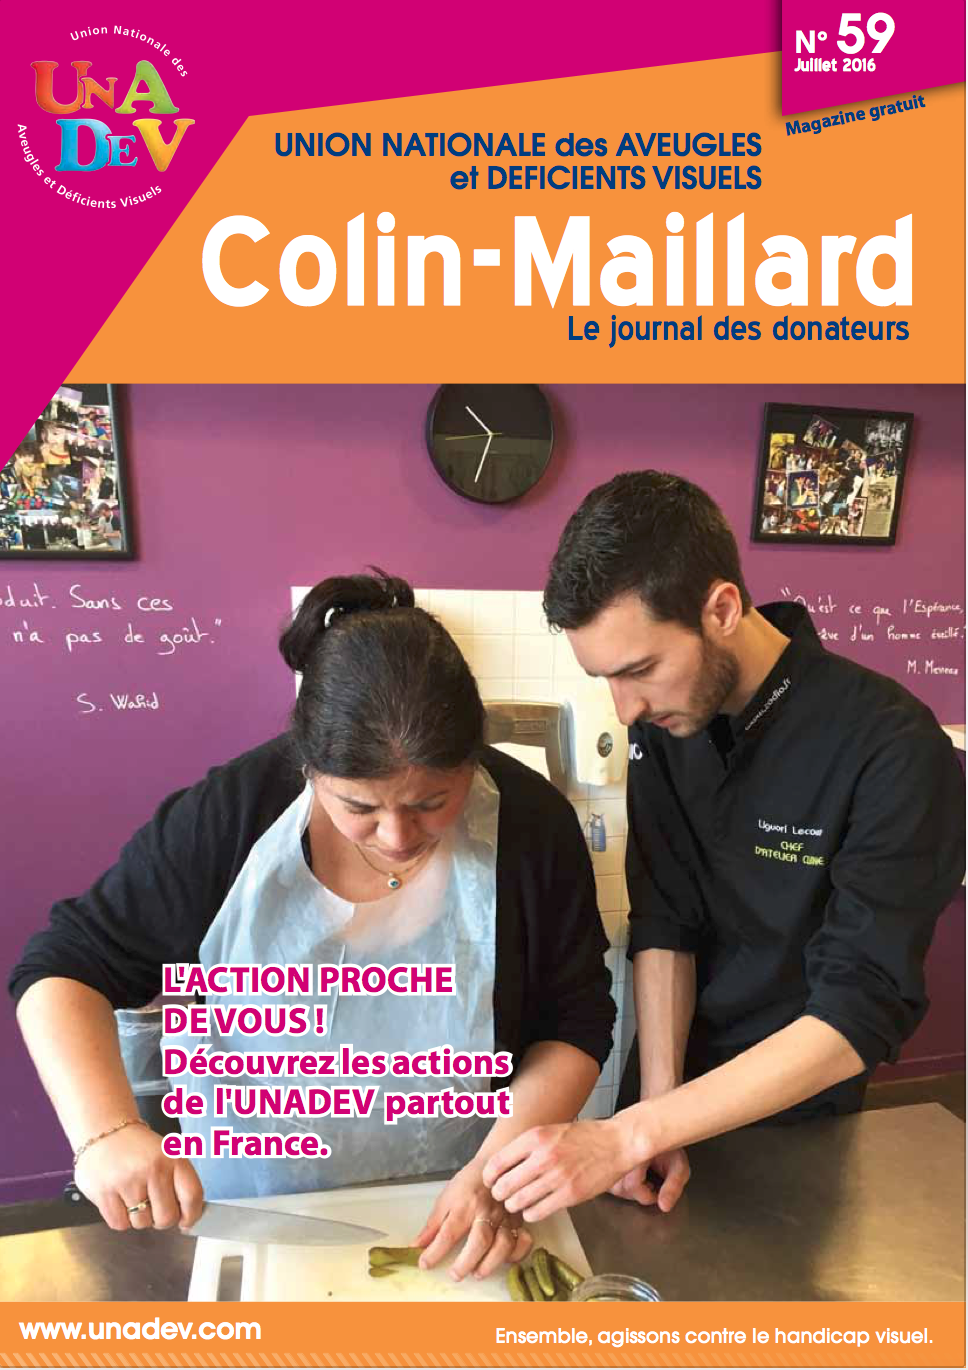 Couverture du magazine Colin Maillard 59